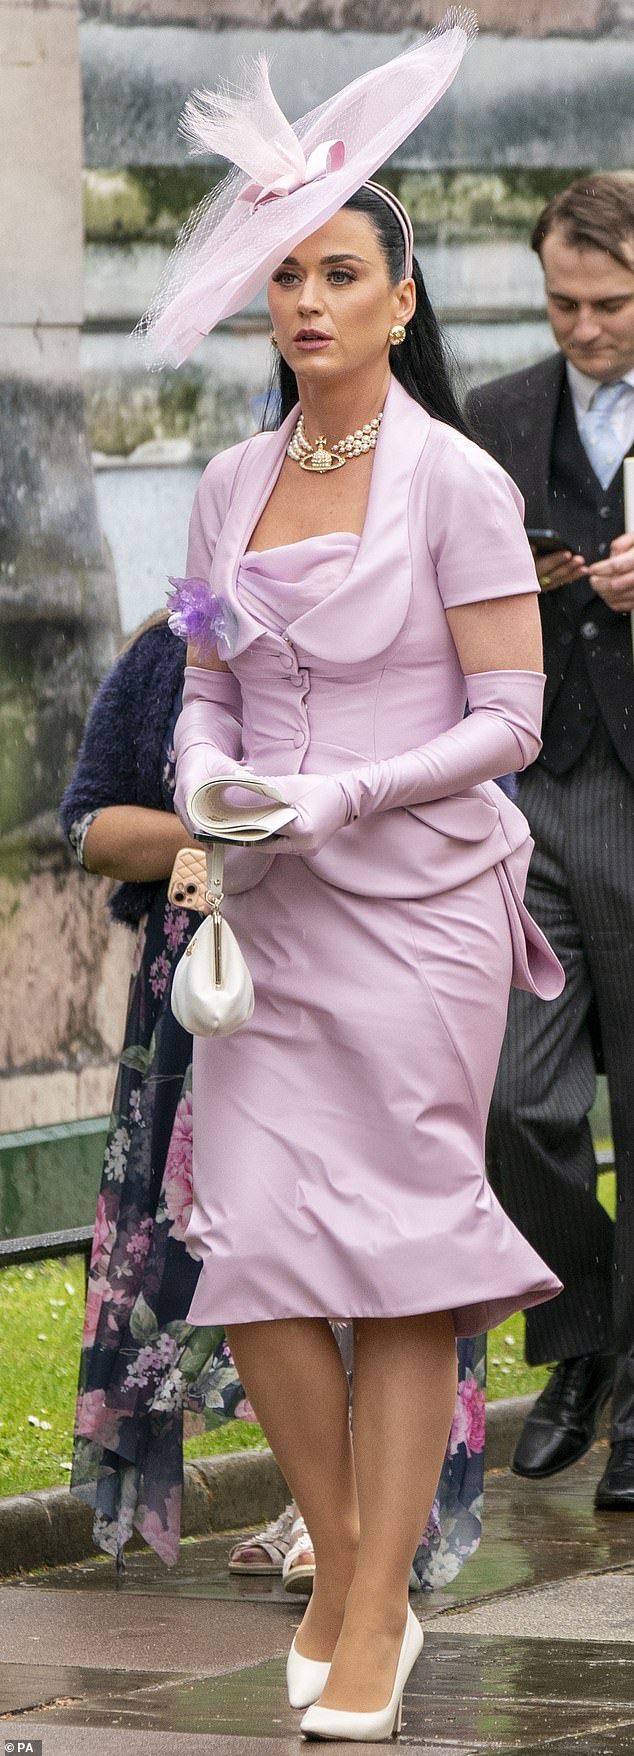 Katy Perry attends the coronation wearing custom Stephen Jones and Vivienne Westwood millinery